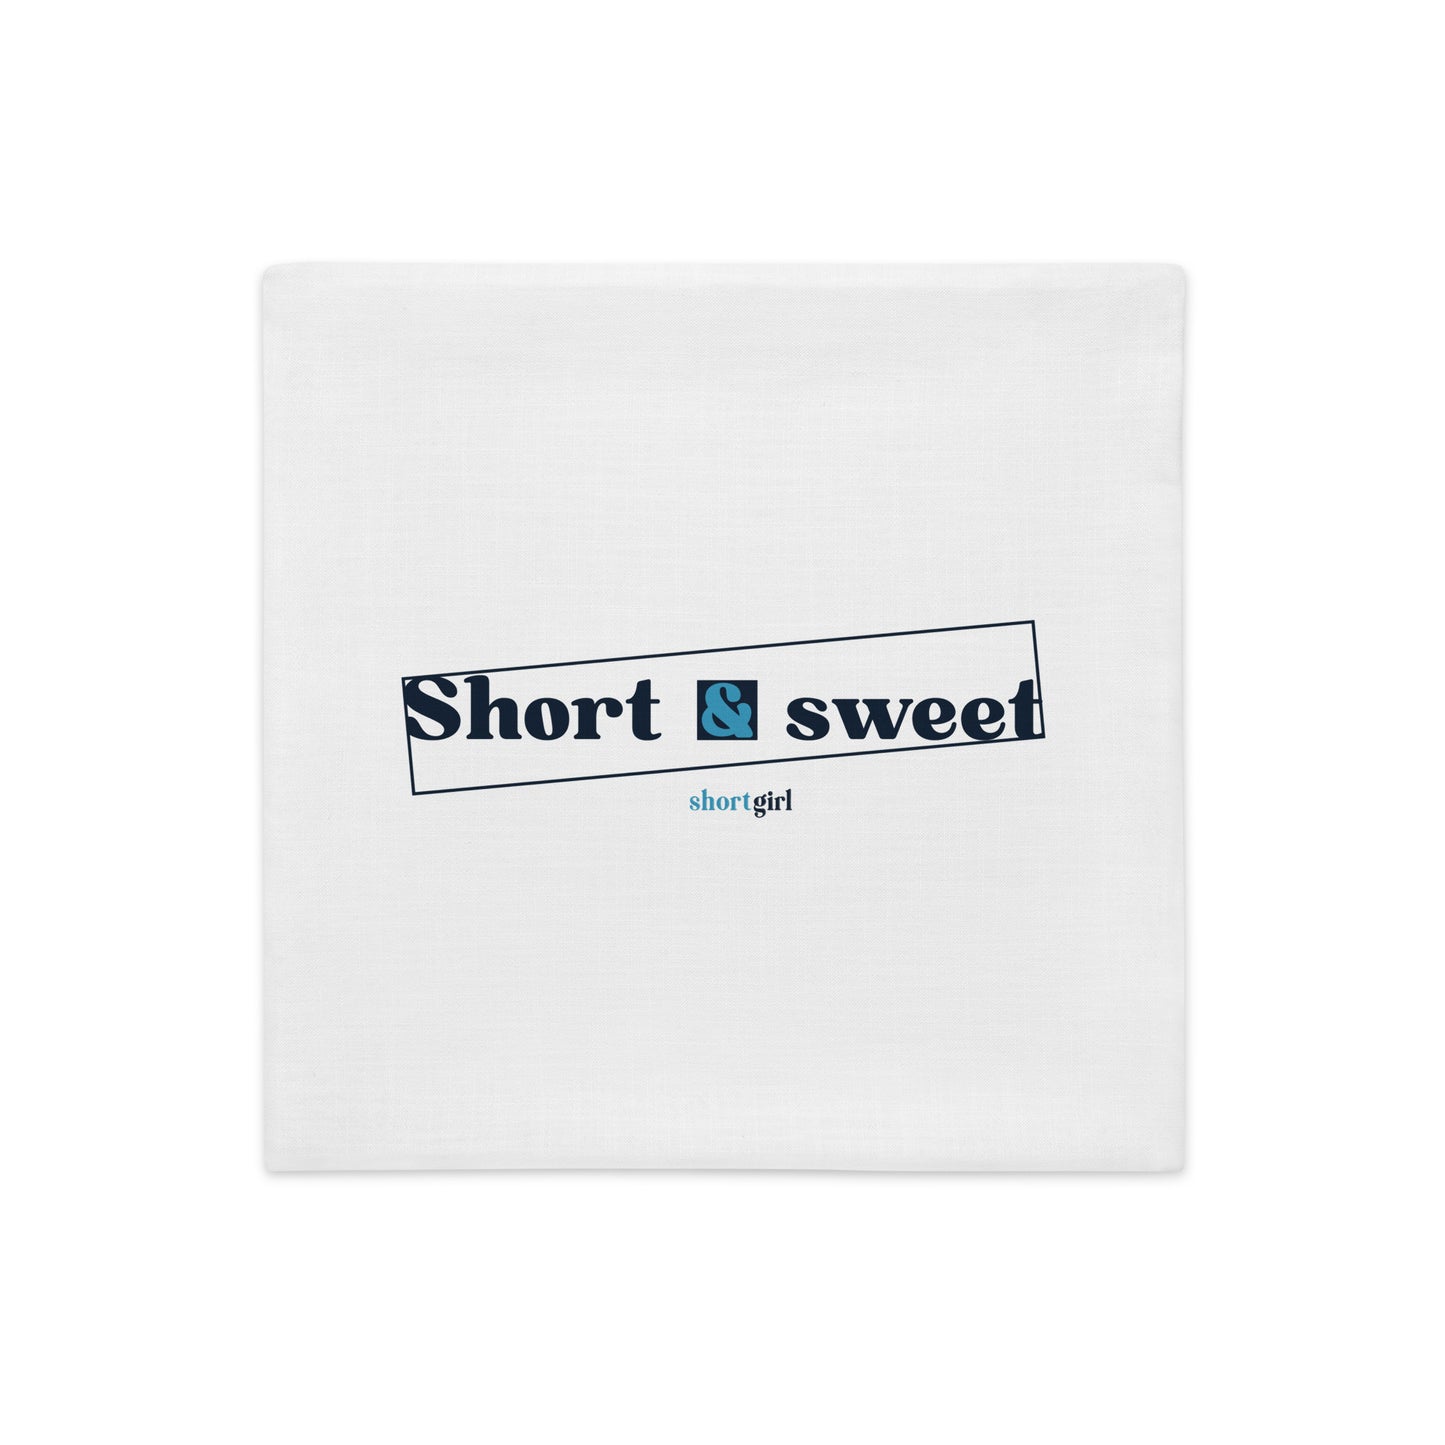 Premium Pillow Case - Short & sweet